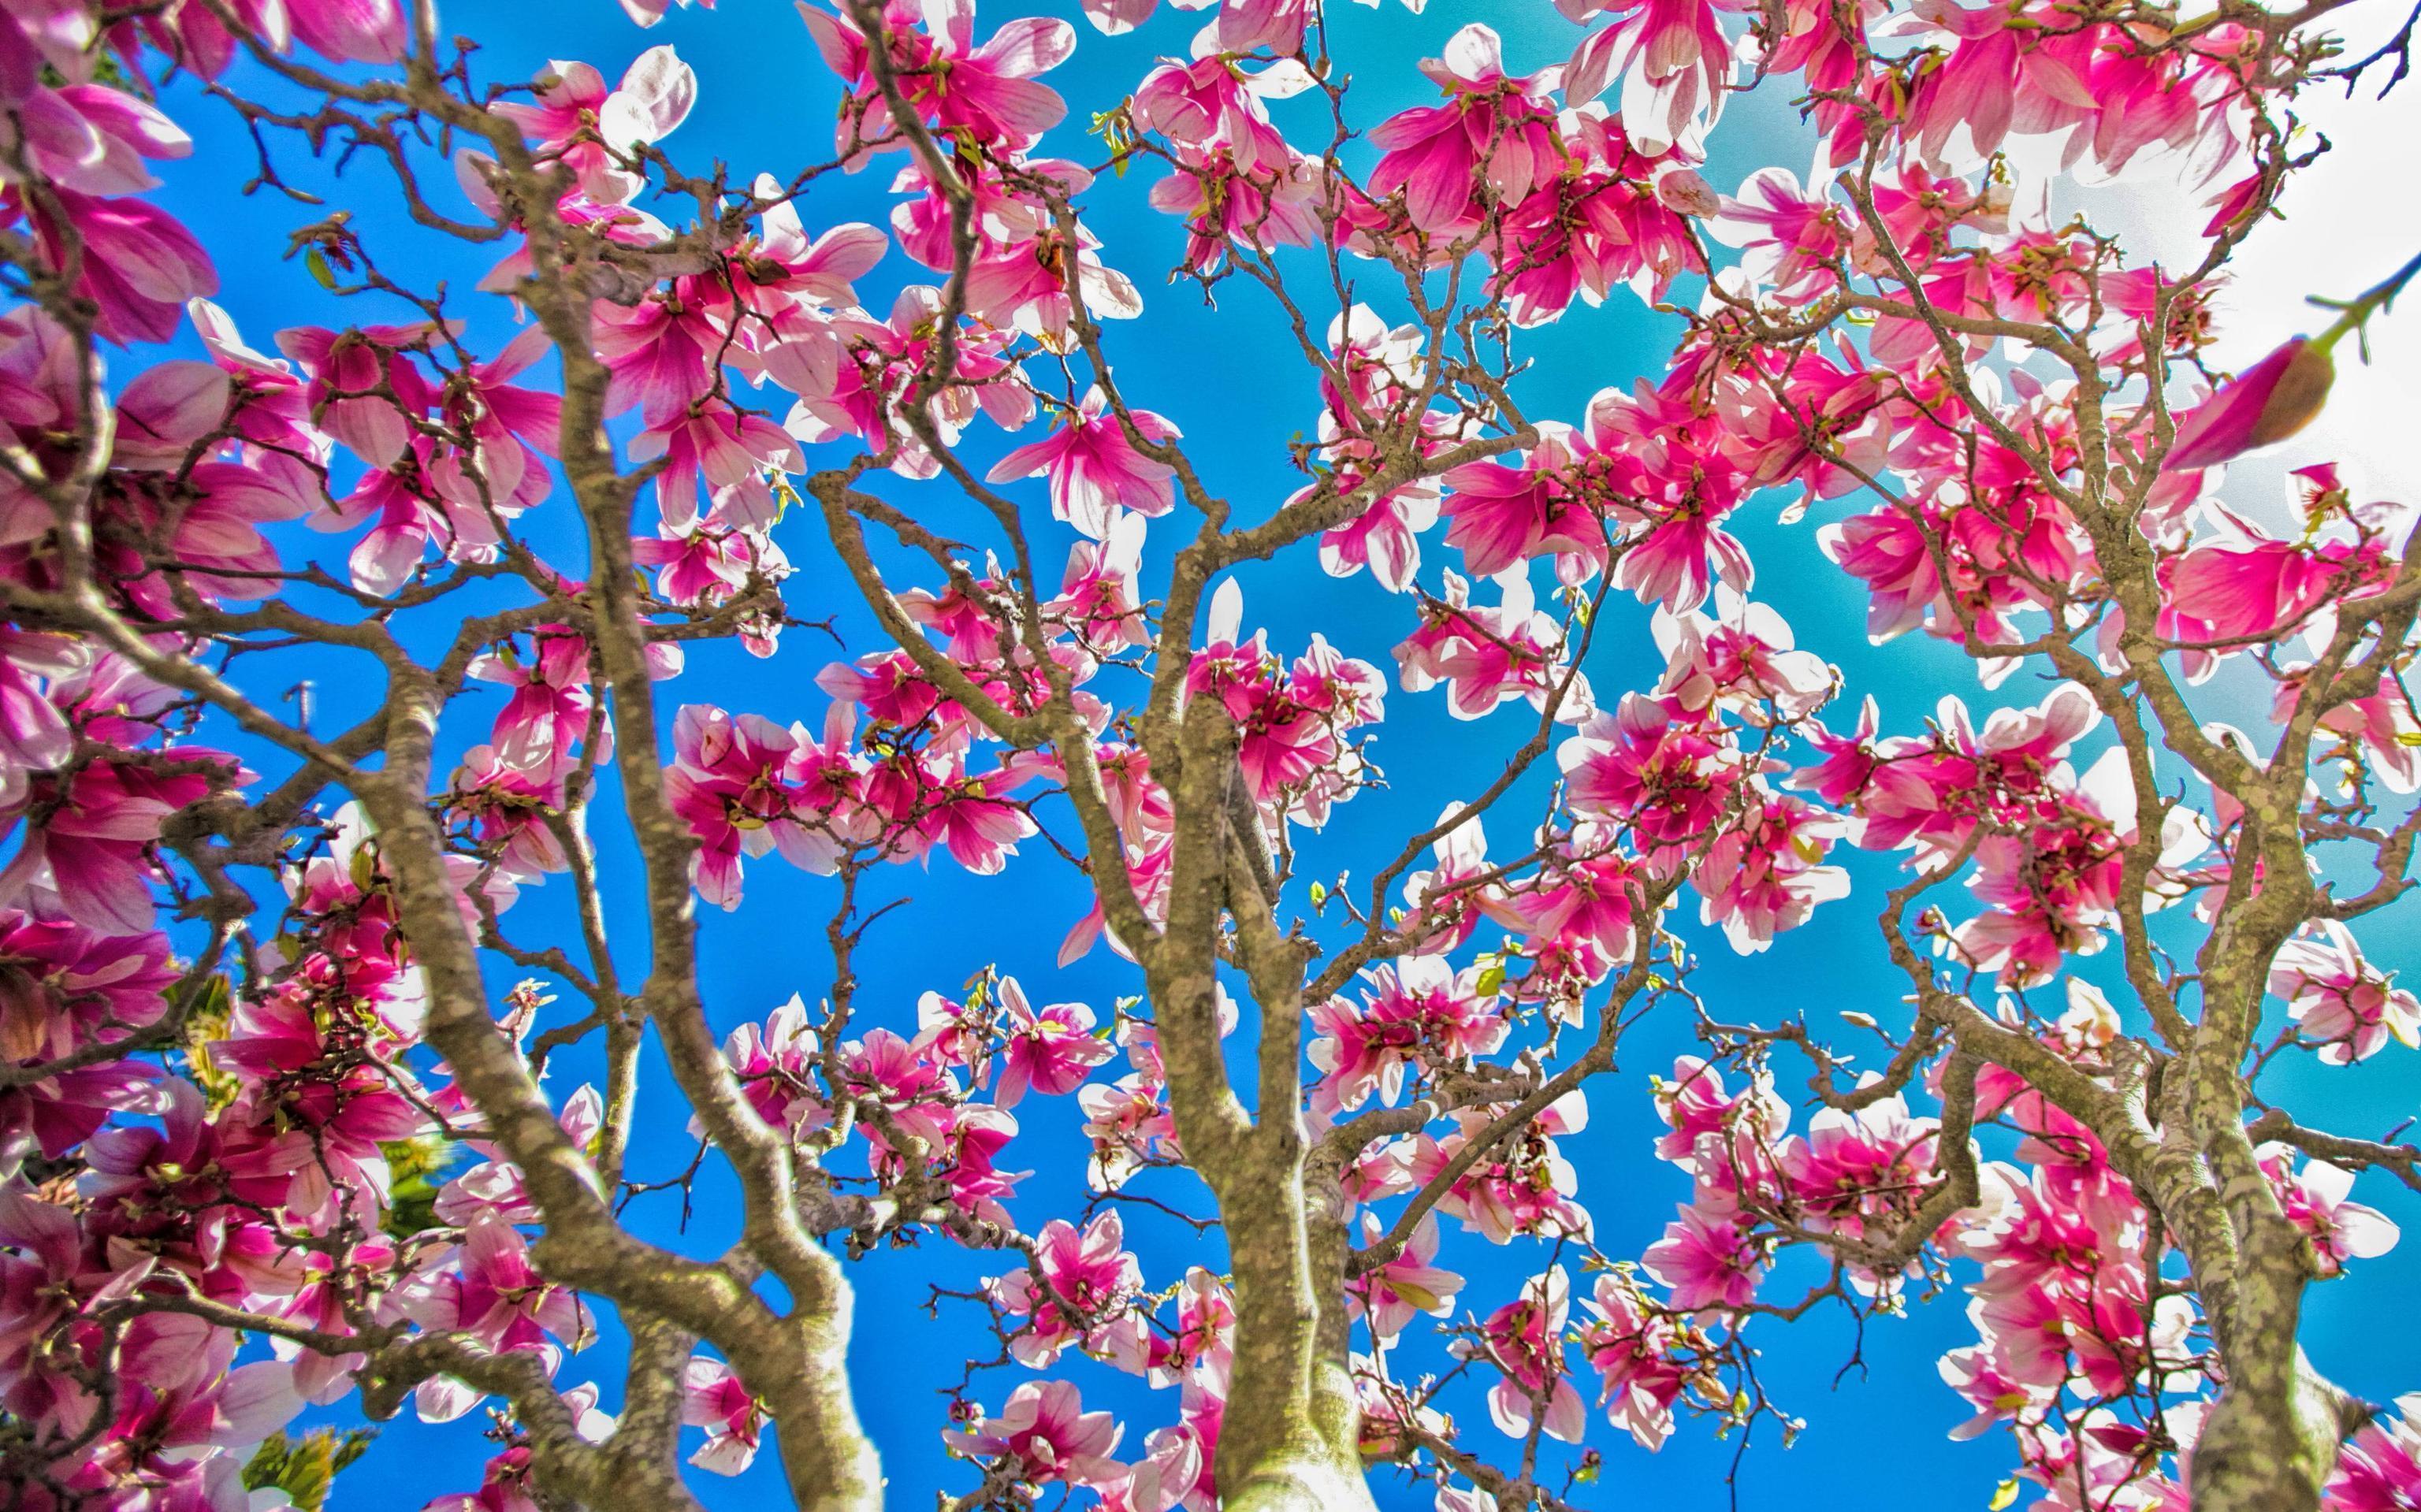 Magnolia Tree Bloom widescreen wallpaper. Wide